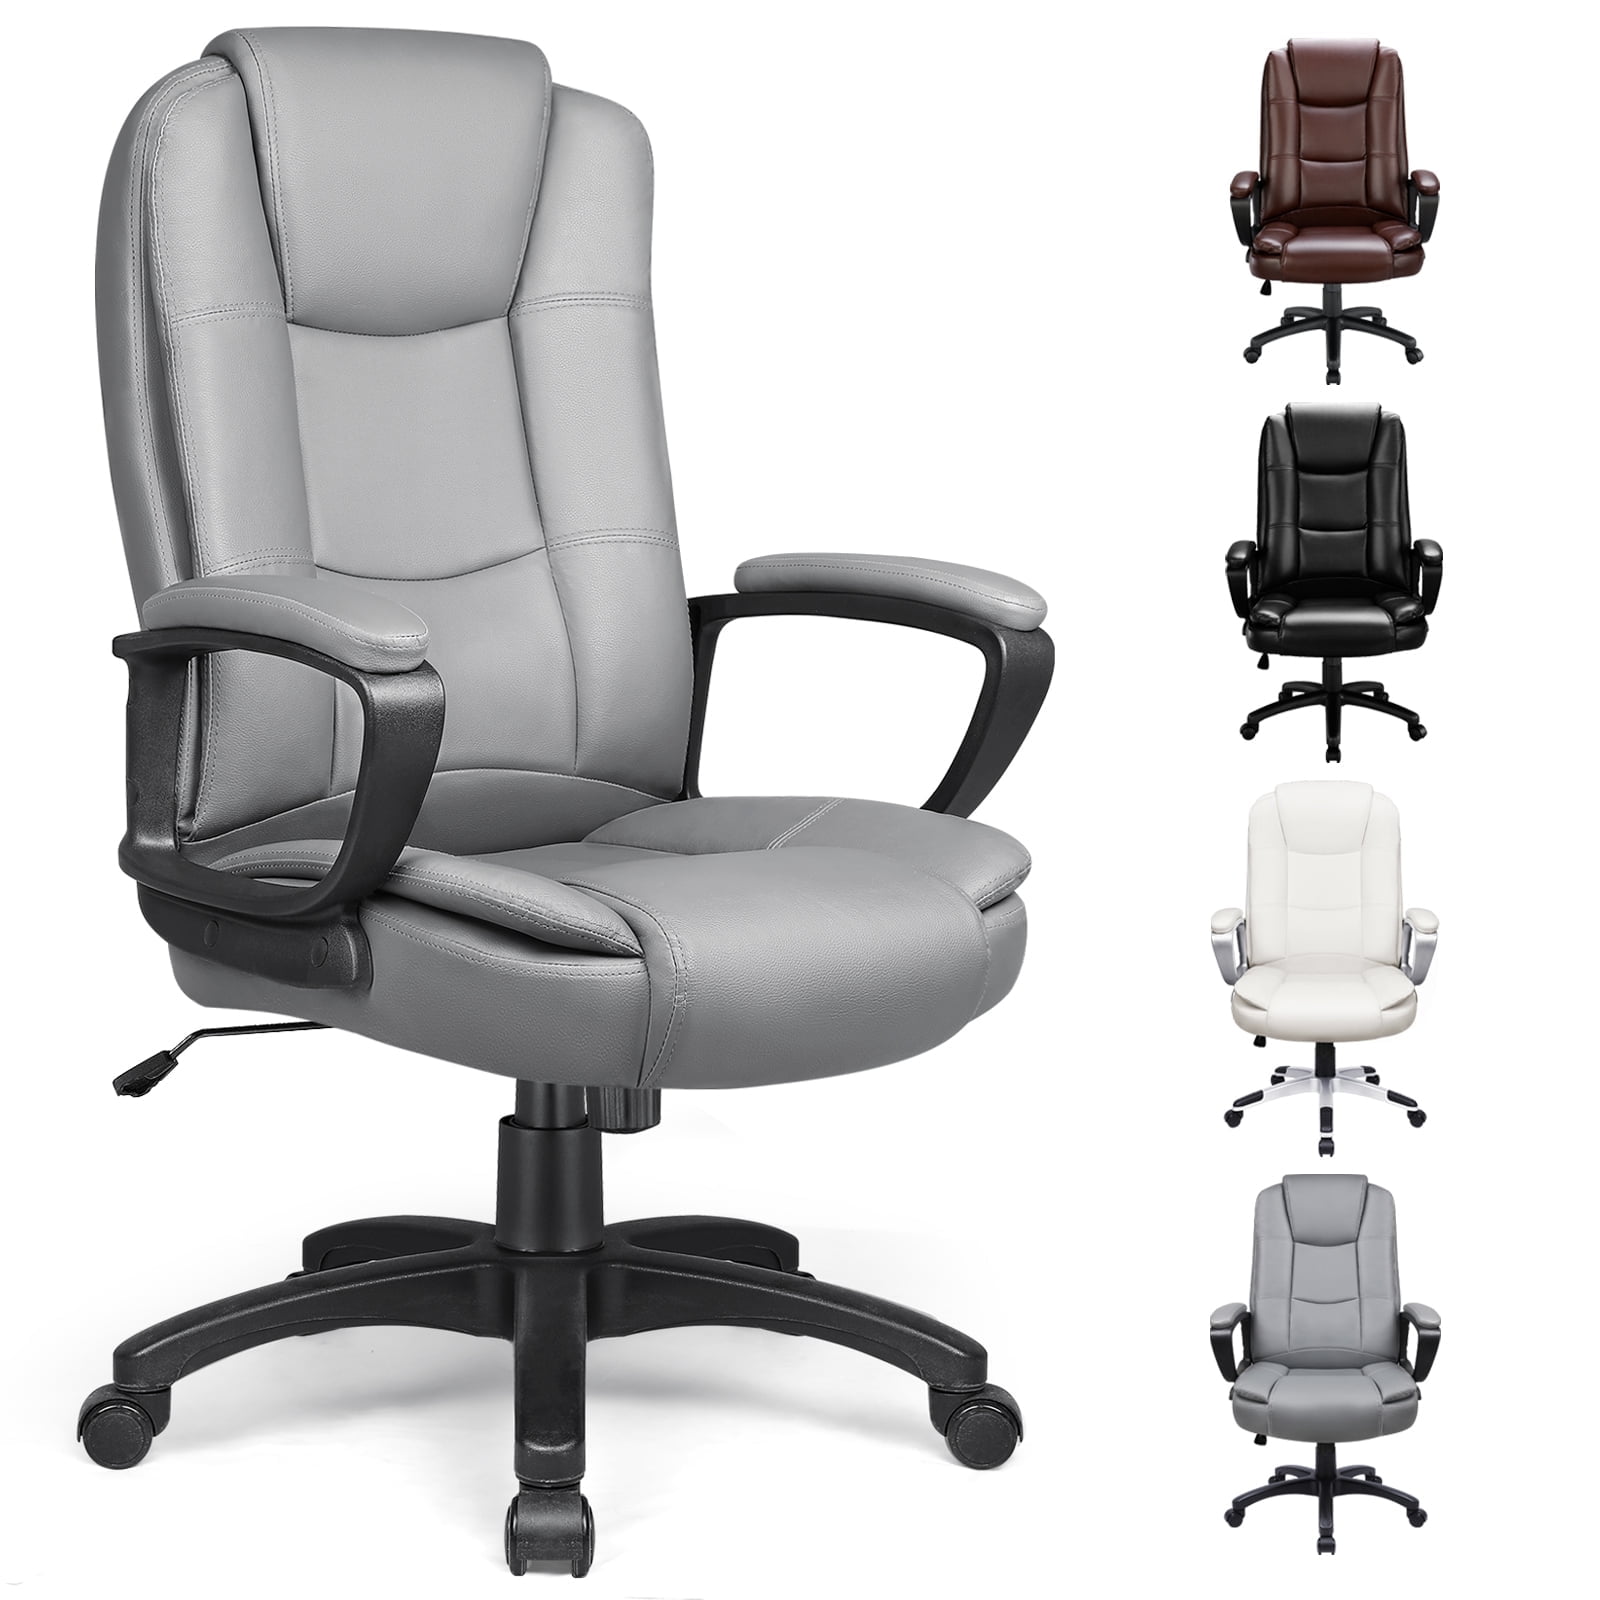 Waleaf Home Office Chair, 400LBS 8Hours Heavy Duty Design